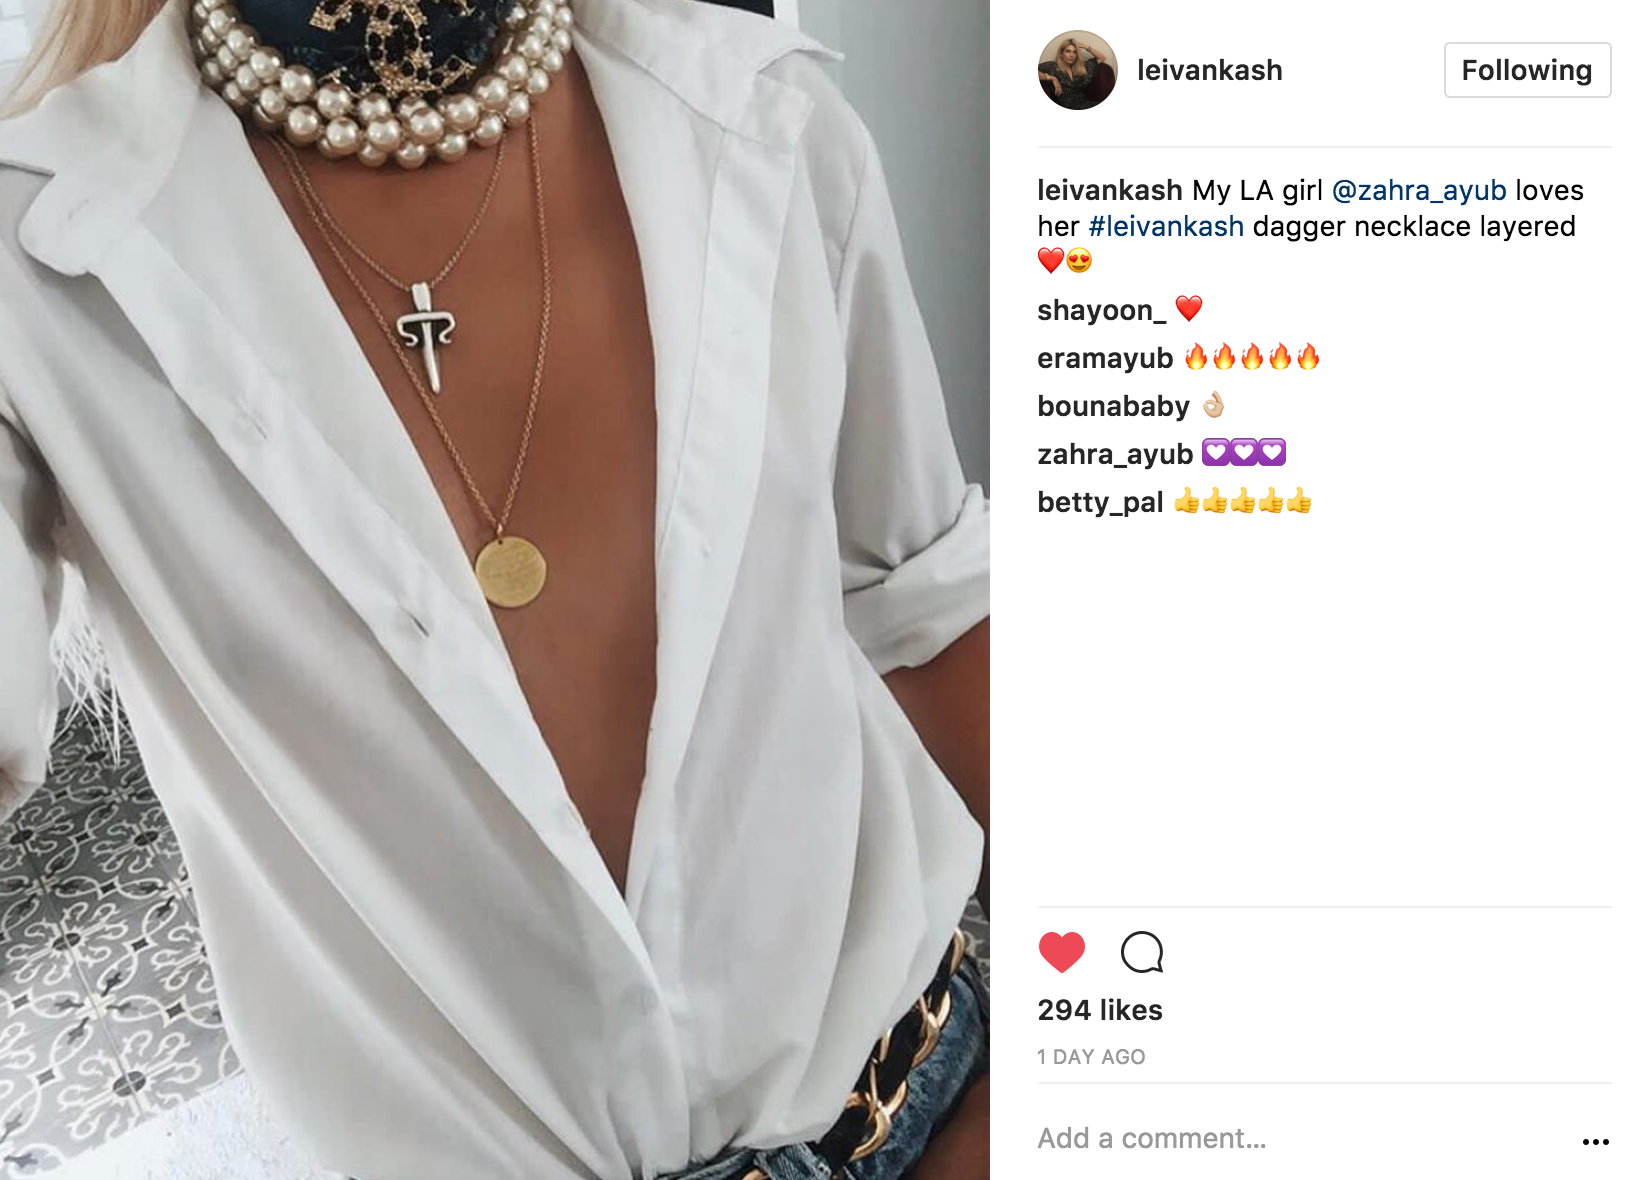 Leivankash Instagram of layered necklaces